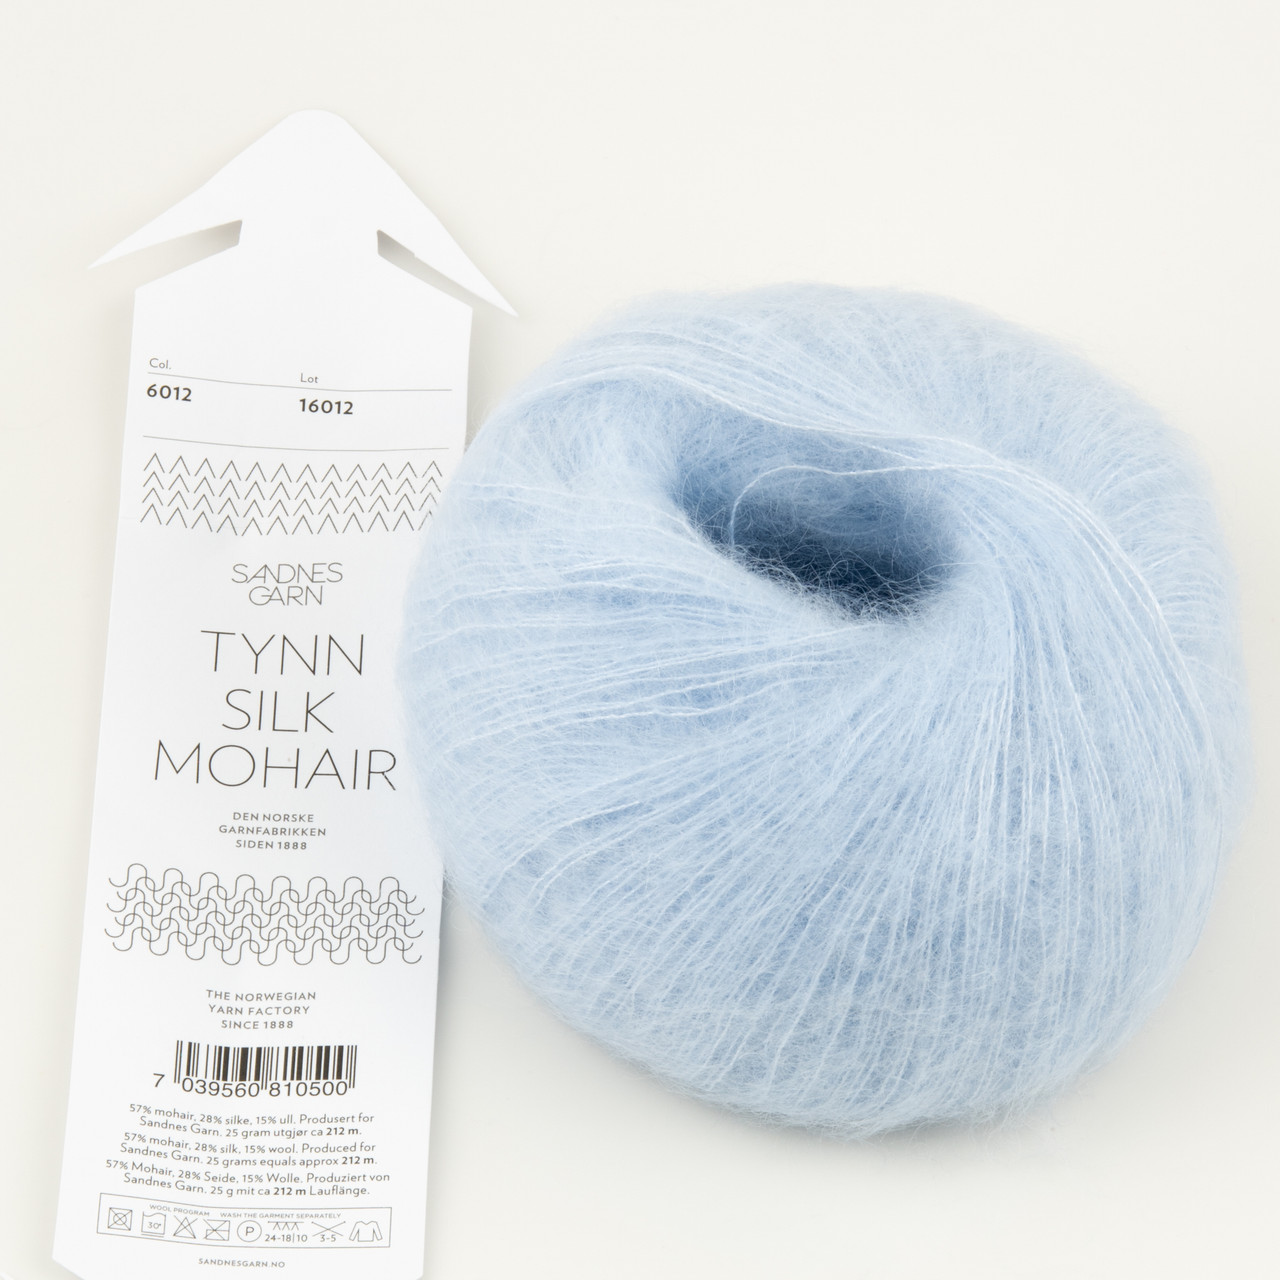 Sandnes Tynn Silk Mohair//Light Blue (6012)